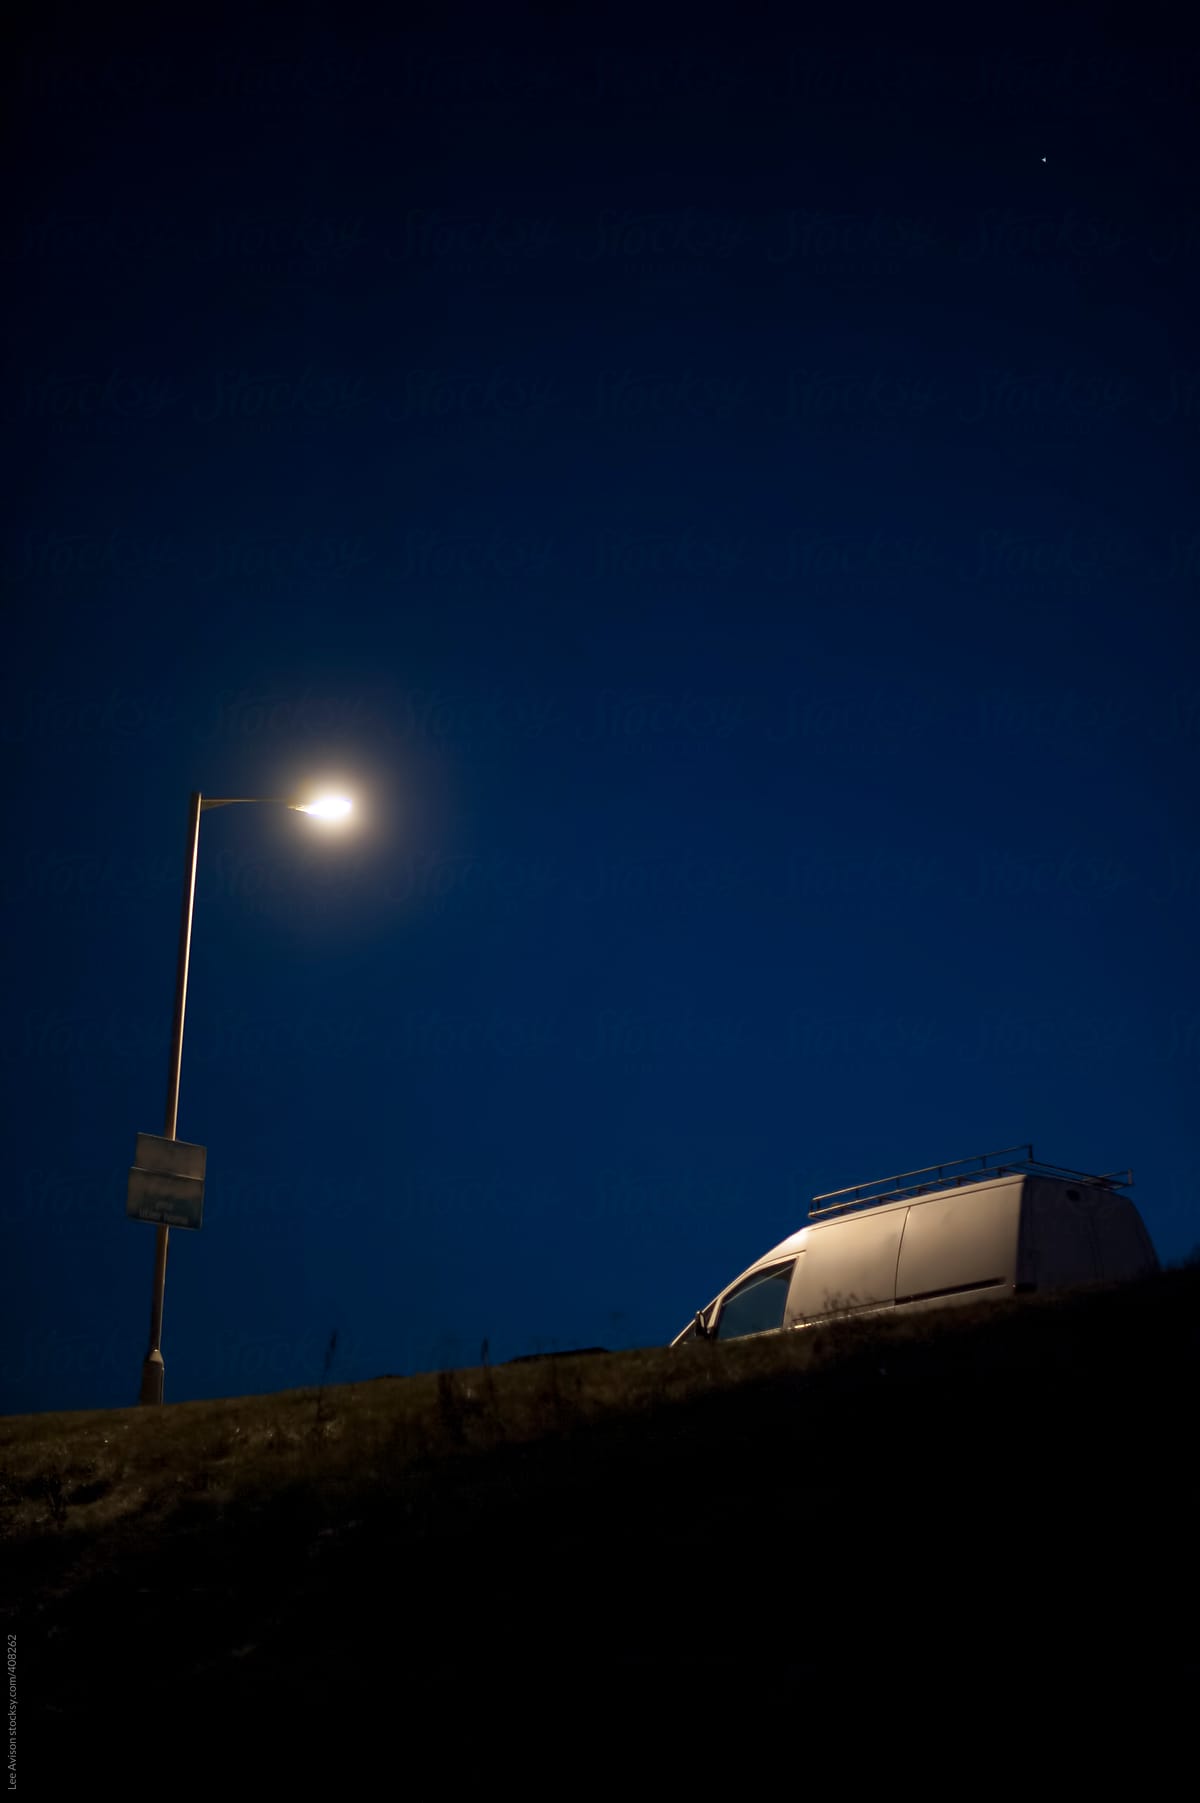 white van parked under a streetlight at night